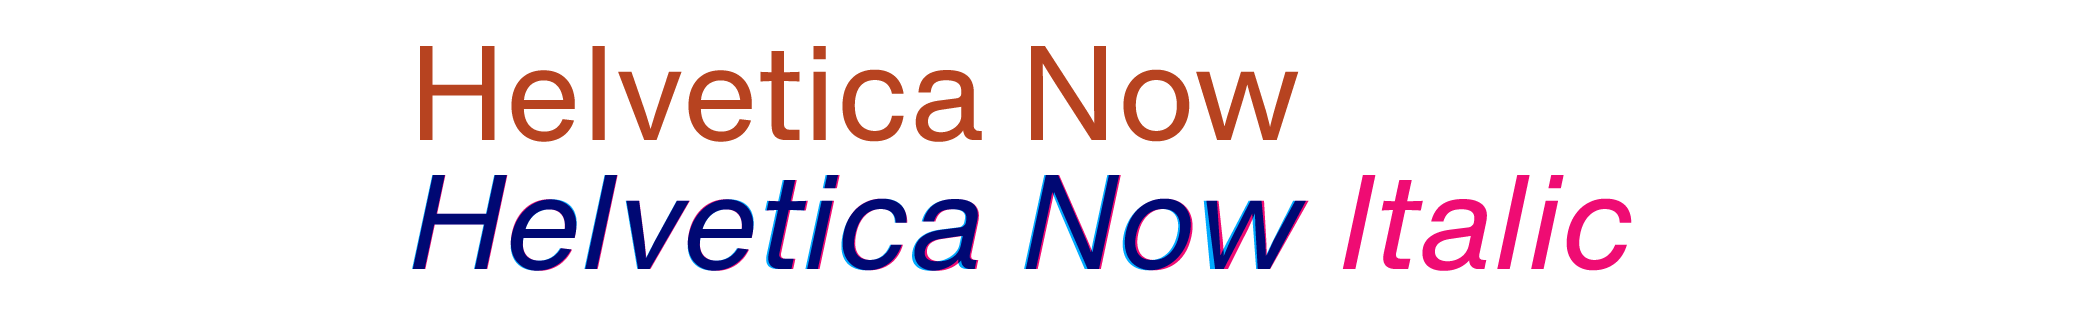 Helvetica Now 羅馬體幾何傾斜（藍色）和意大利體（洋紅）的疊圖對比，邊緣可見極其微妙的視覺調整